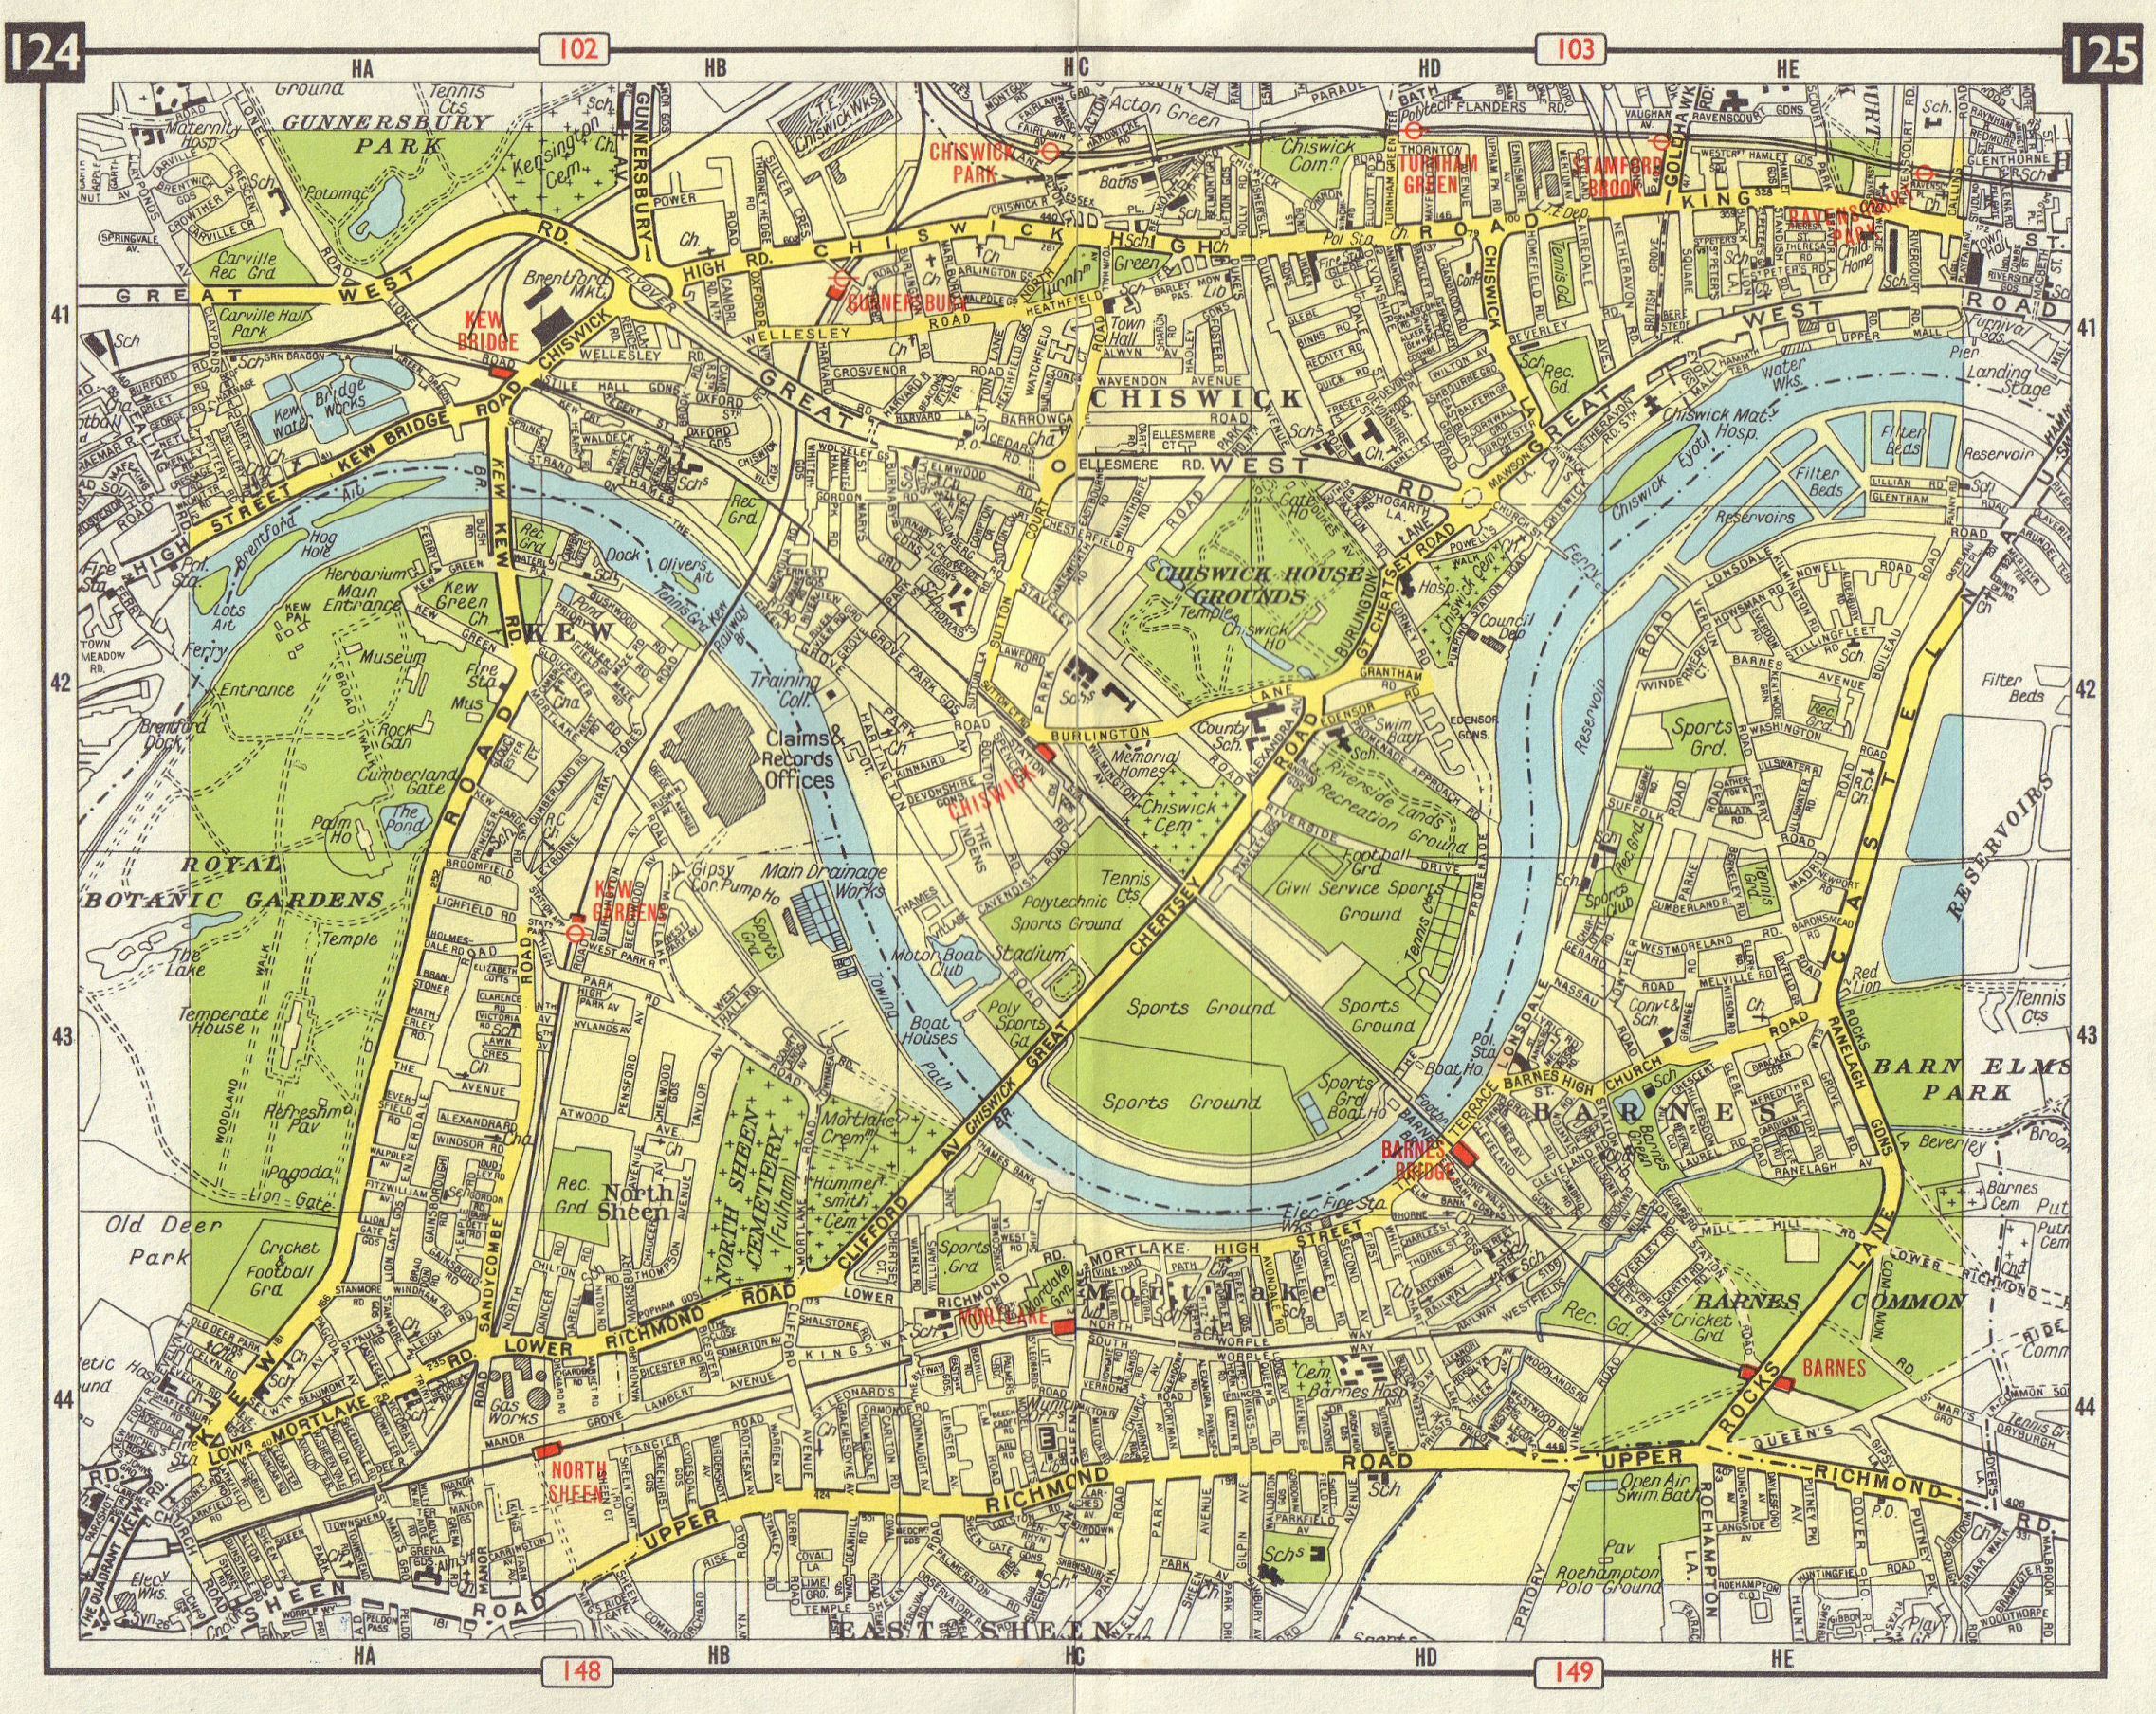 SW LONDON Chiswick Gunnerbsury Kew Mortlake Barnes North Sheen 1965 old map